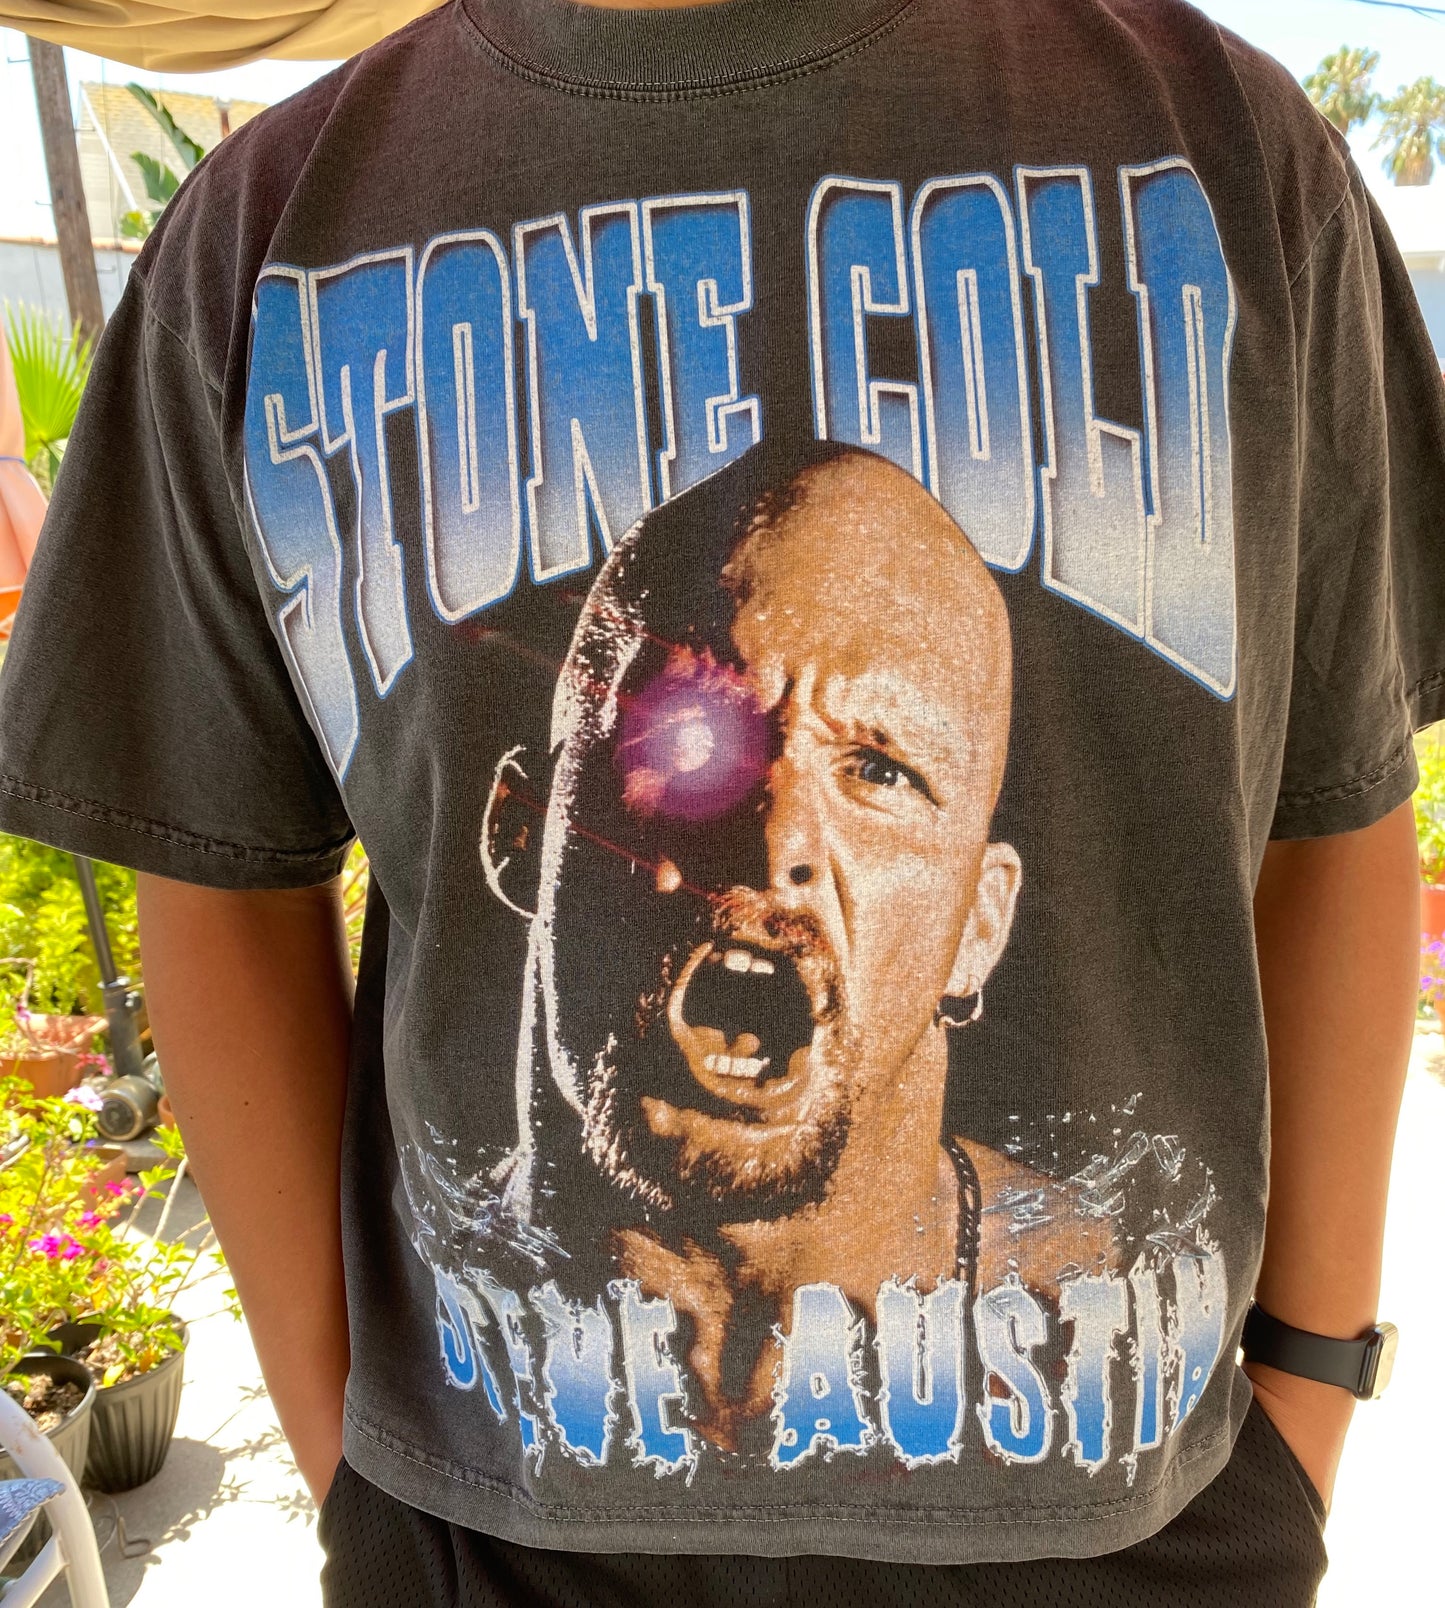 STONE COLD 'HVYBOX' T-Shirt